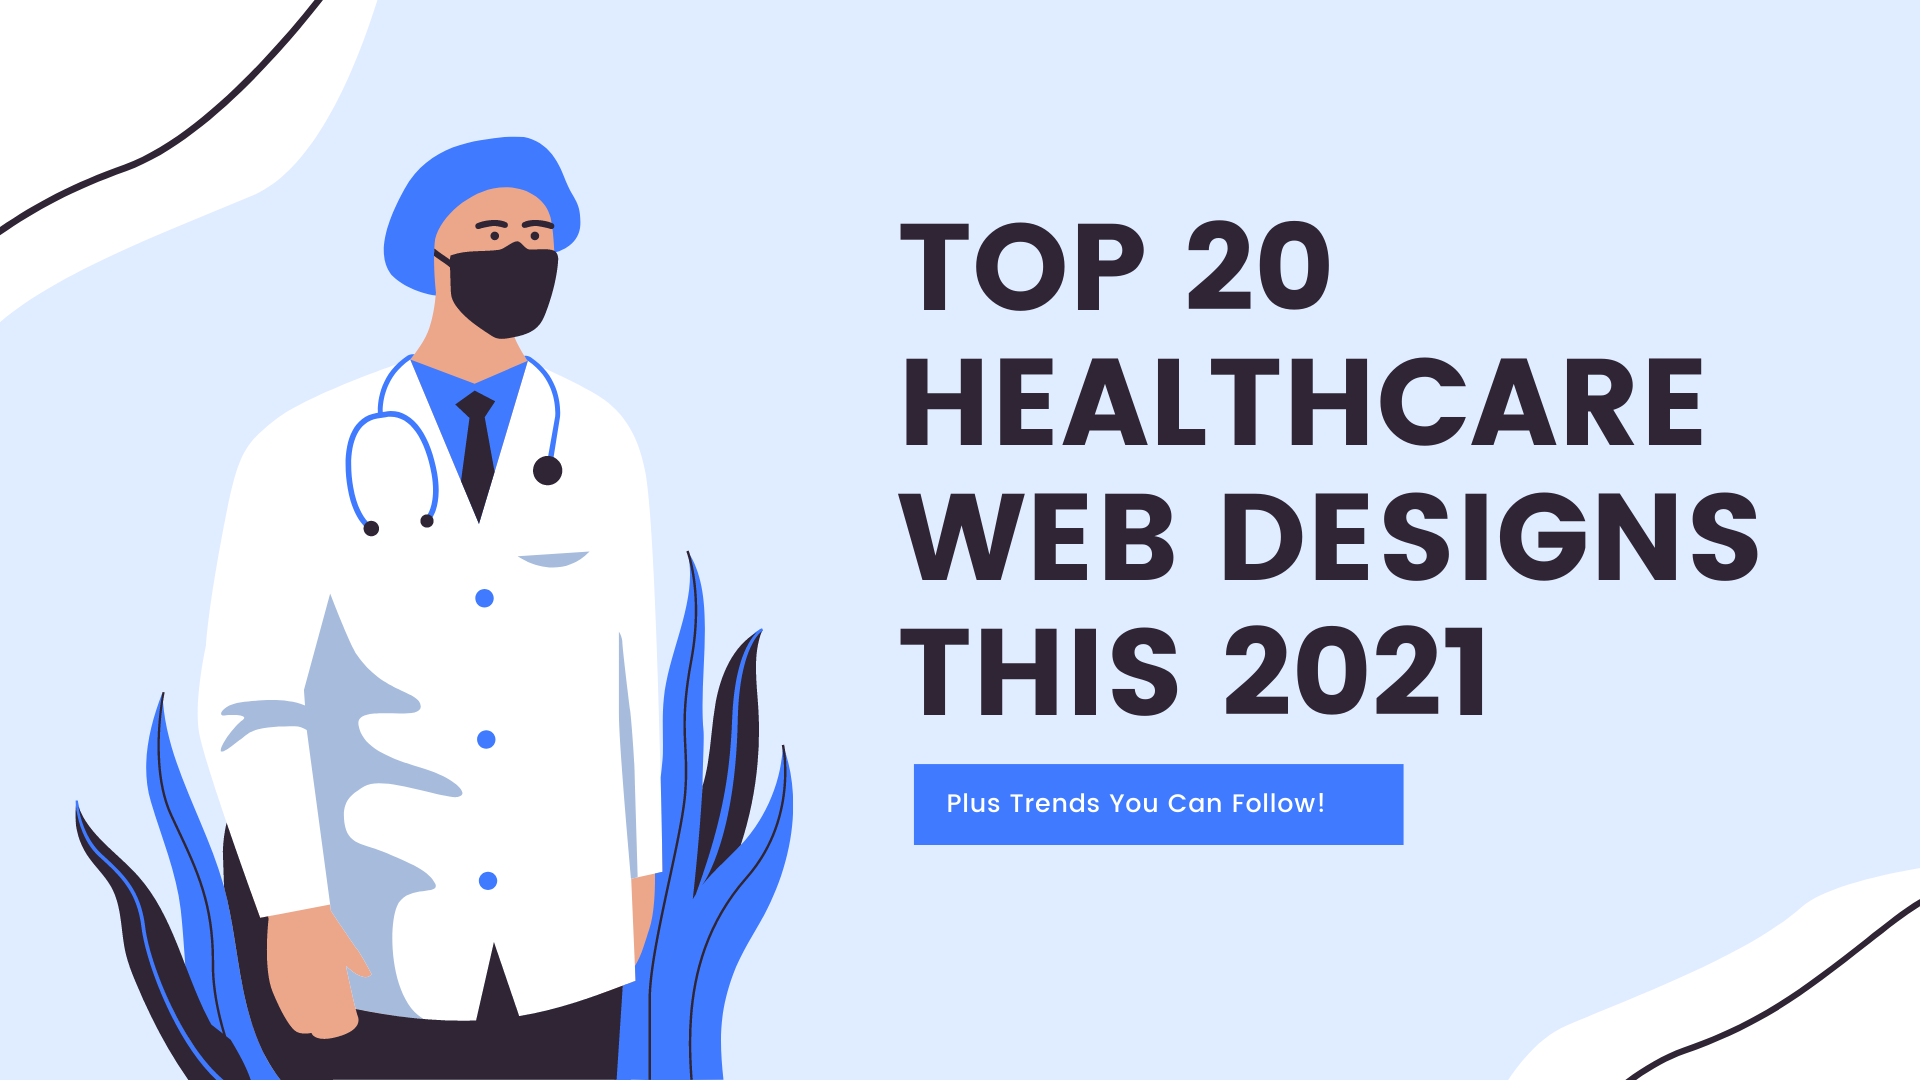 Top 20 Healthcare Web Designs This 2021